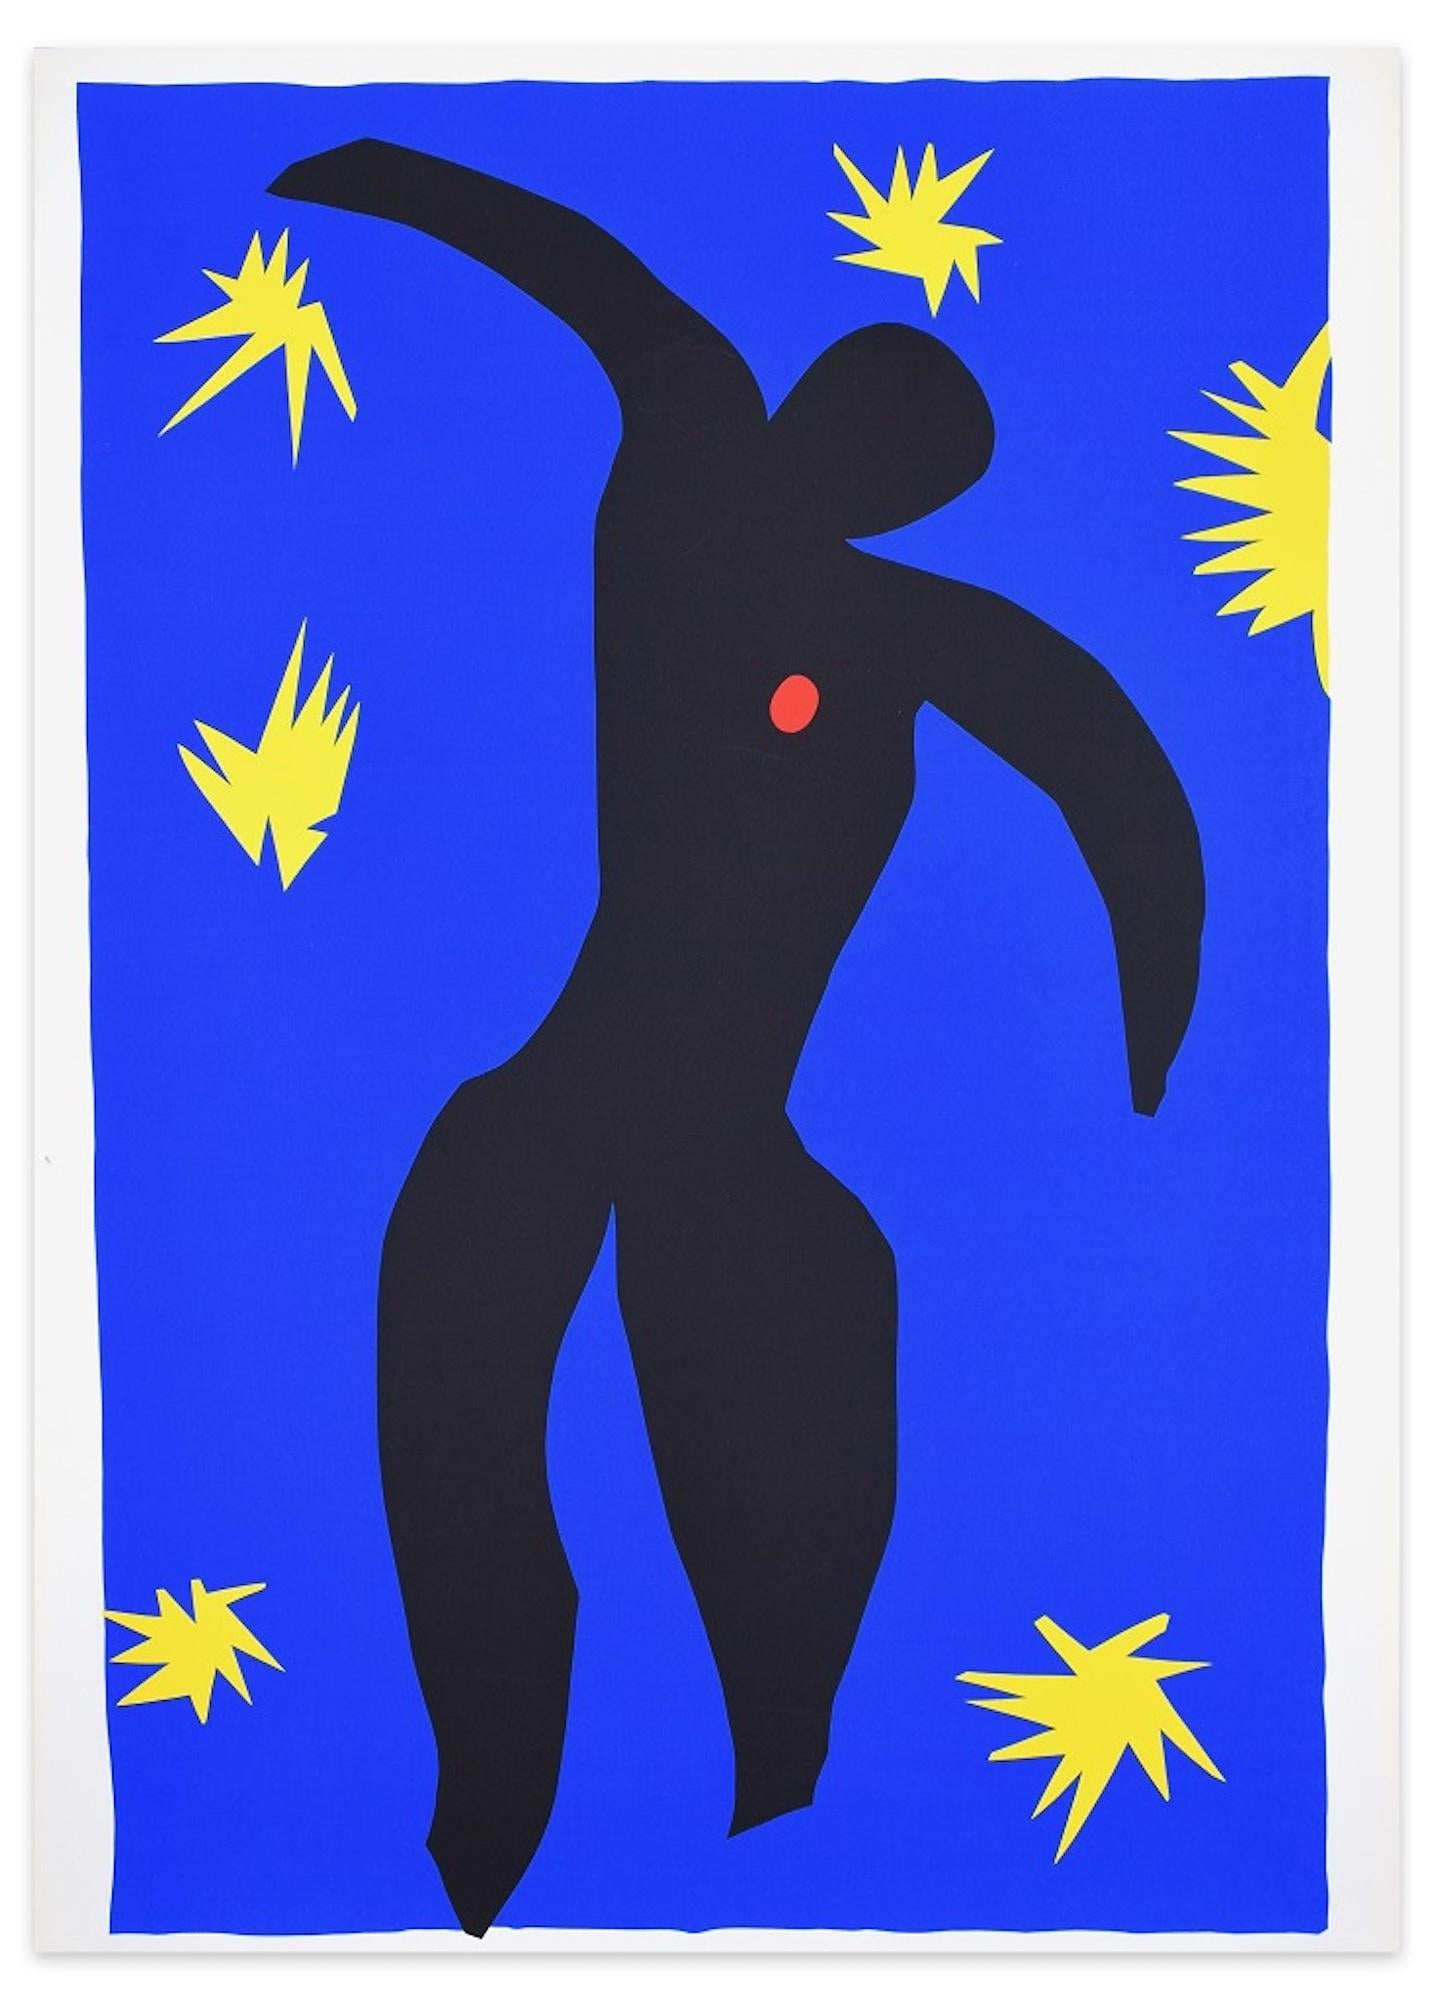 Het begin Verbieden Gelukkig is dat after) Henri Matisse - Icarus - Screen Print After Henri Matisse - 1970s  For Sale at 1stDibs | matisse icarus meaning, matisse screen prints, henri matisse  icarus meaning